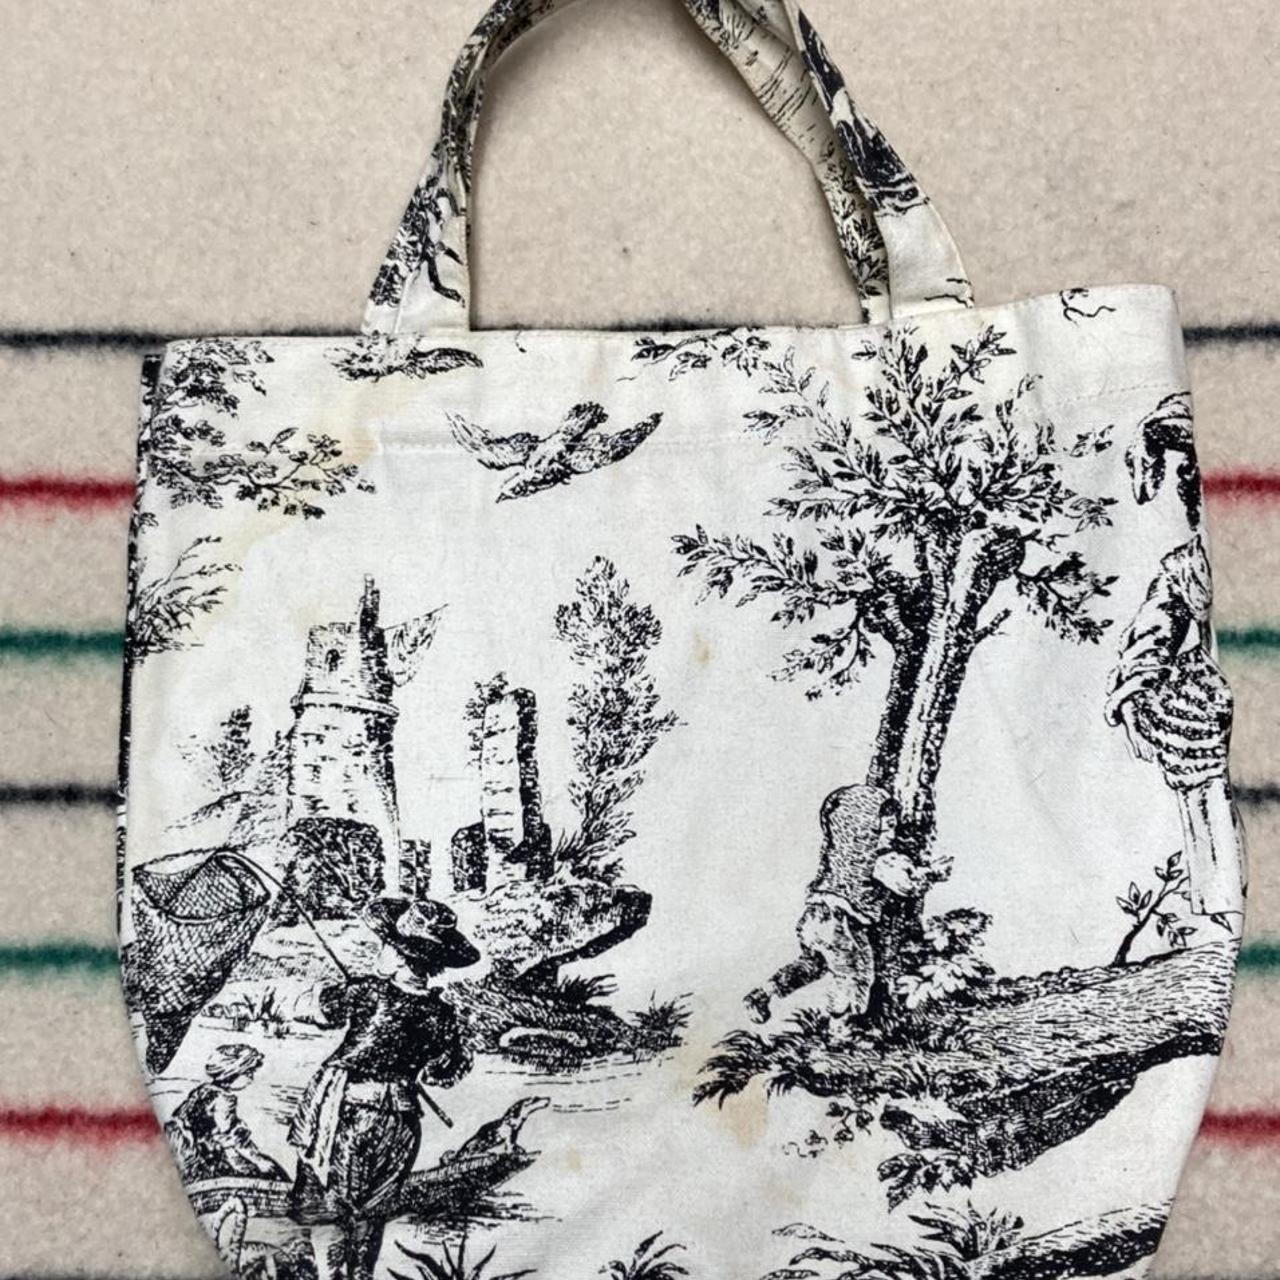 Cotton canvas tote bag lightweight fishing dog lake - Depop